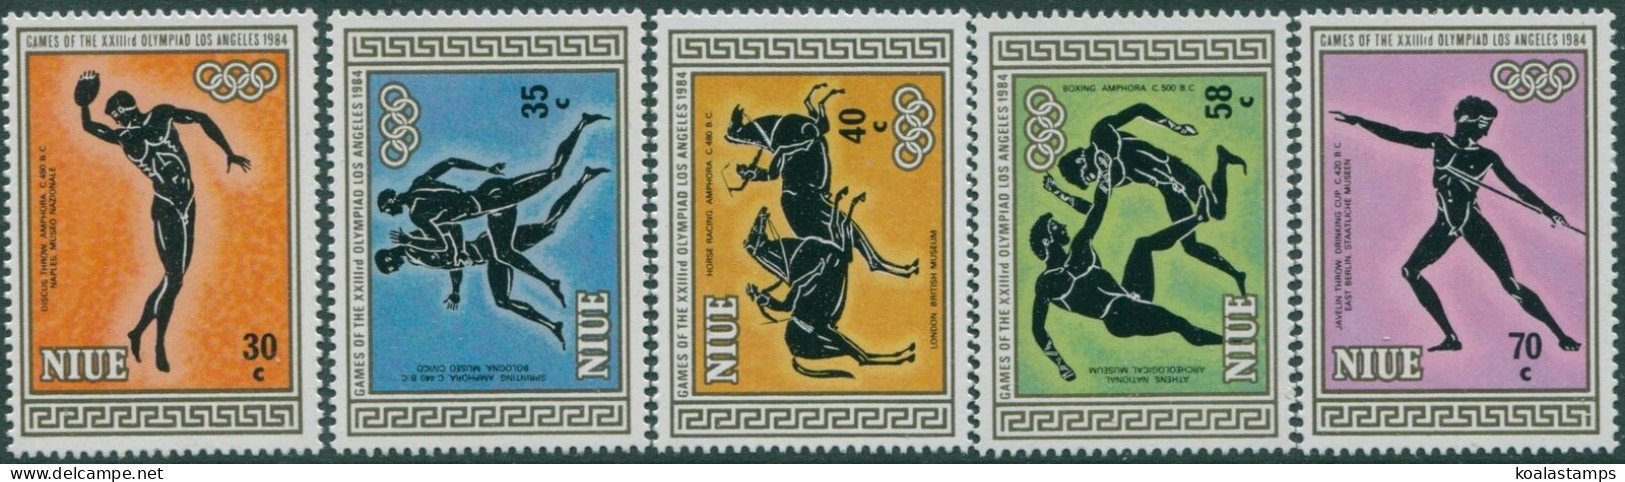 Niue 1984 SG547-551 Olympic Games Set MNH - Niue